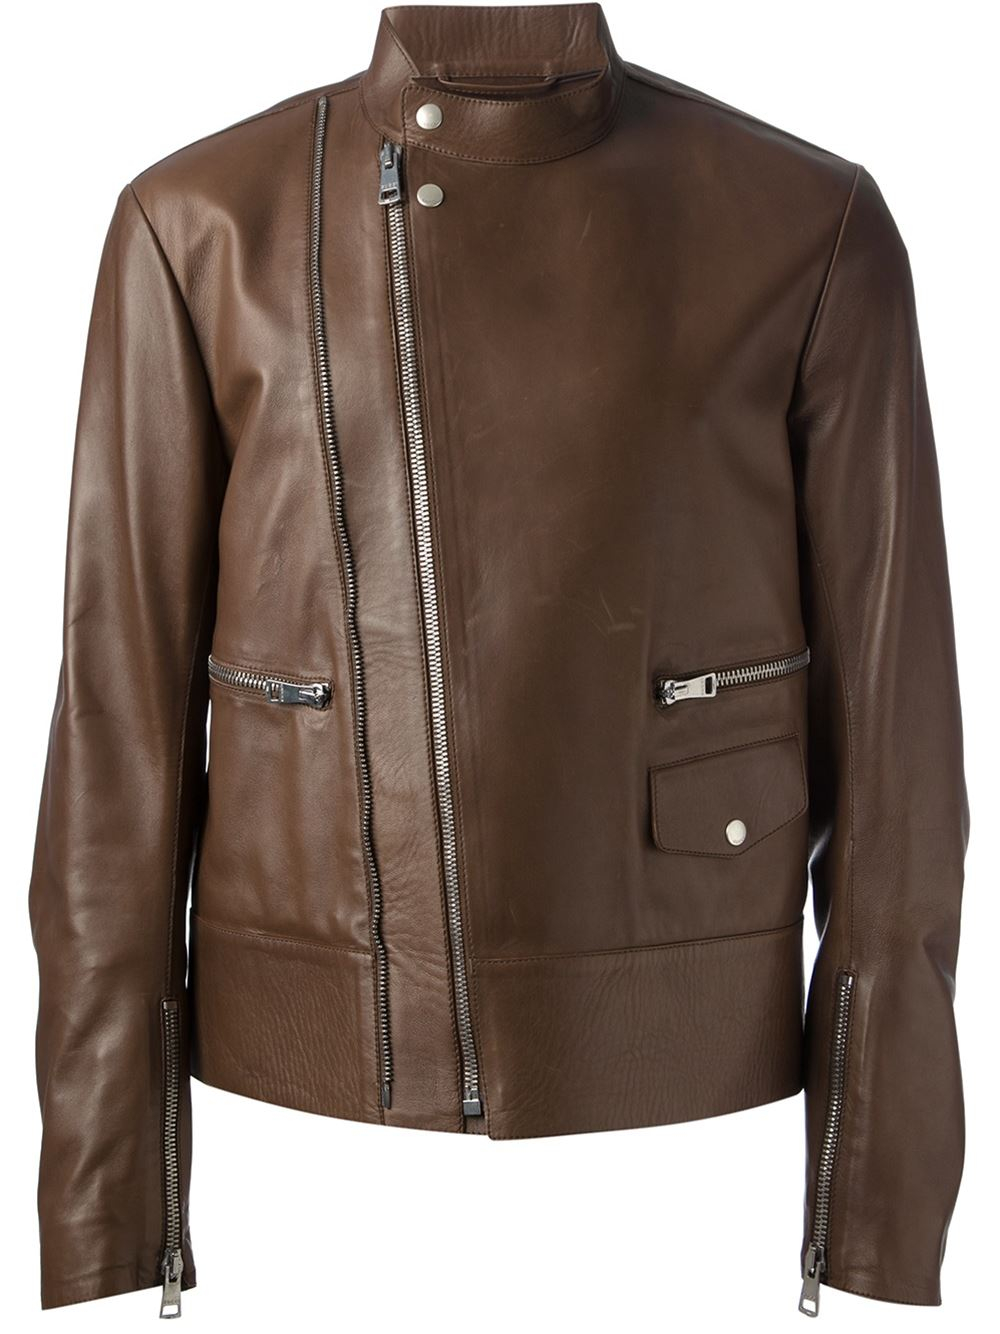 Gucci Biker Jacket in Brown for Men - Lyst